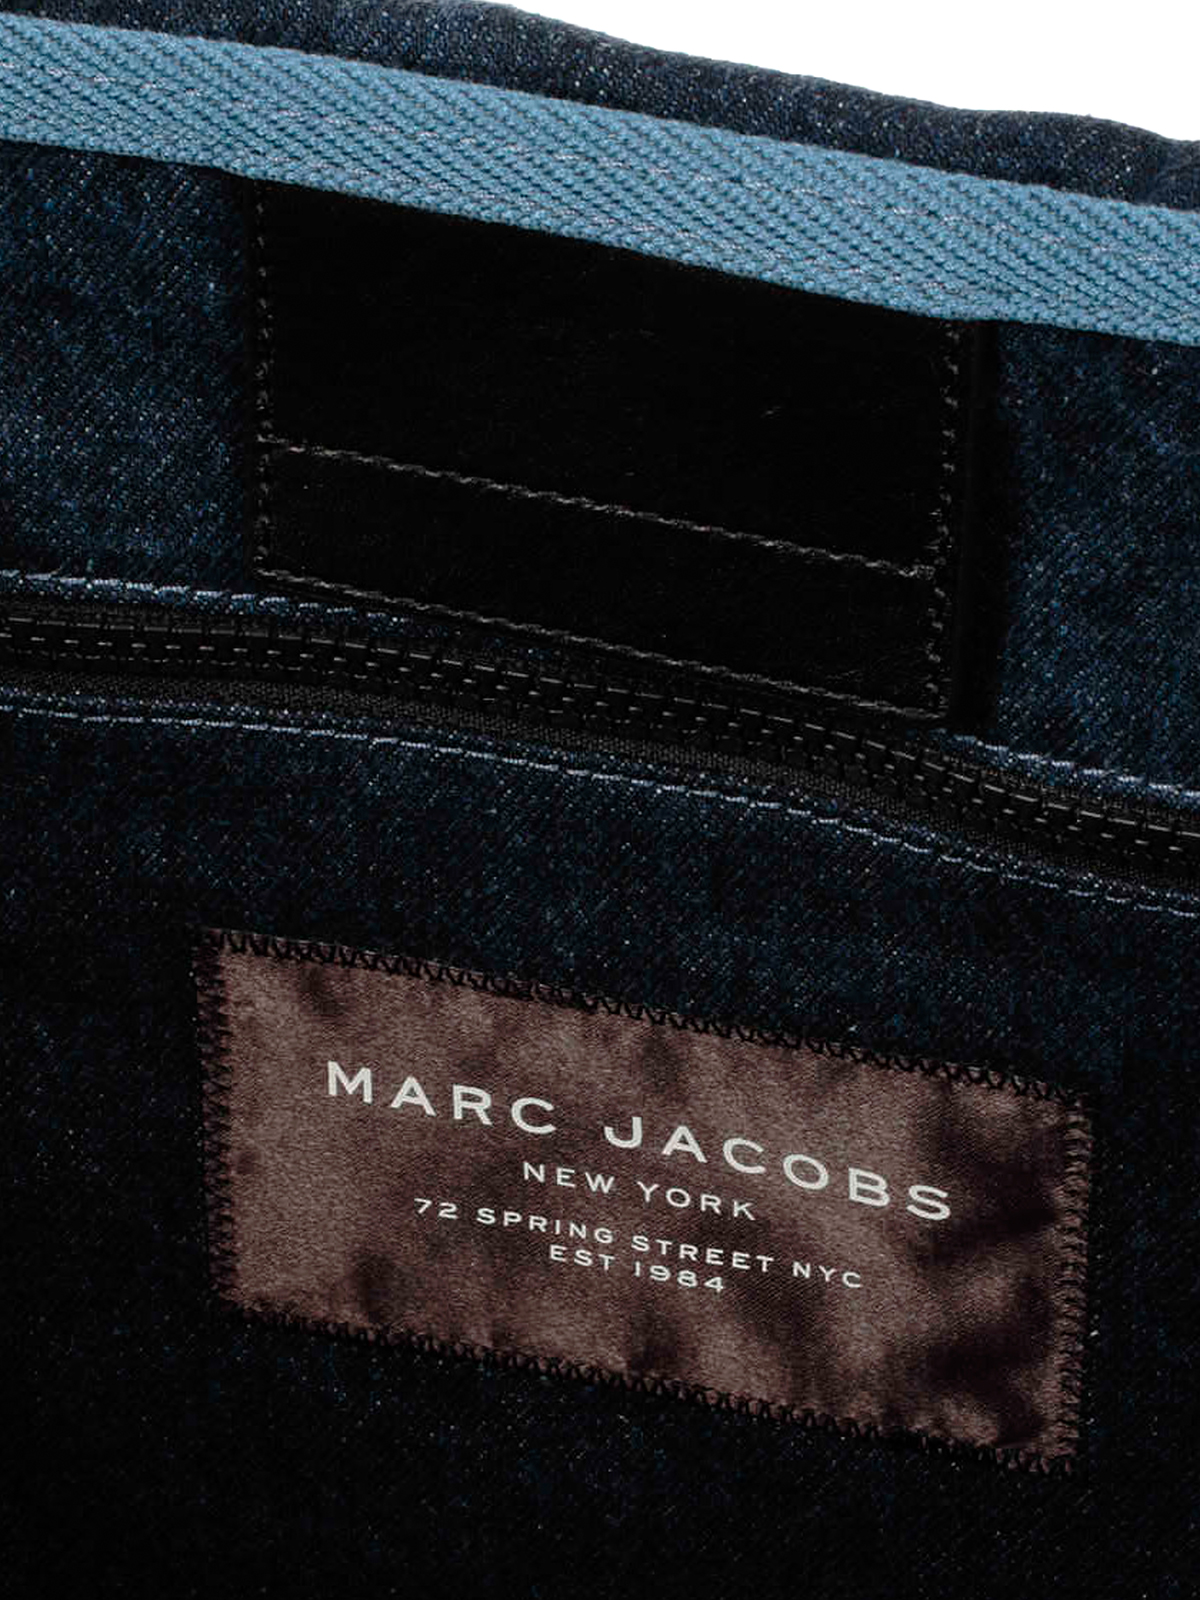 Totes bags Marc Jacobs - New Logo denim tote - M0011123423